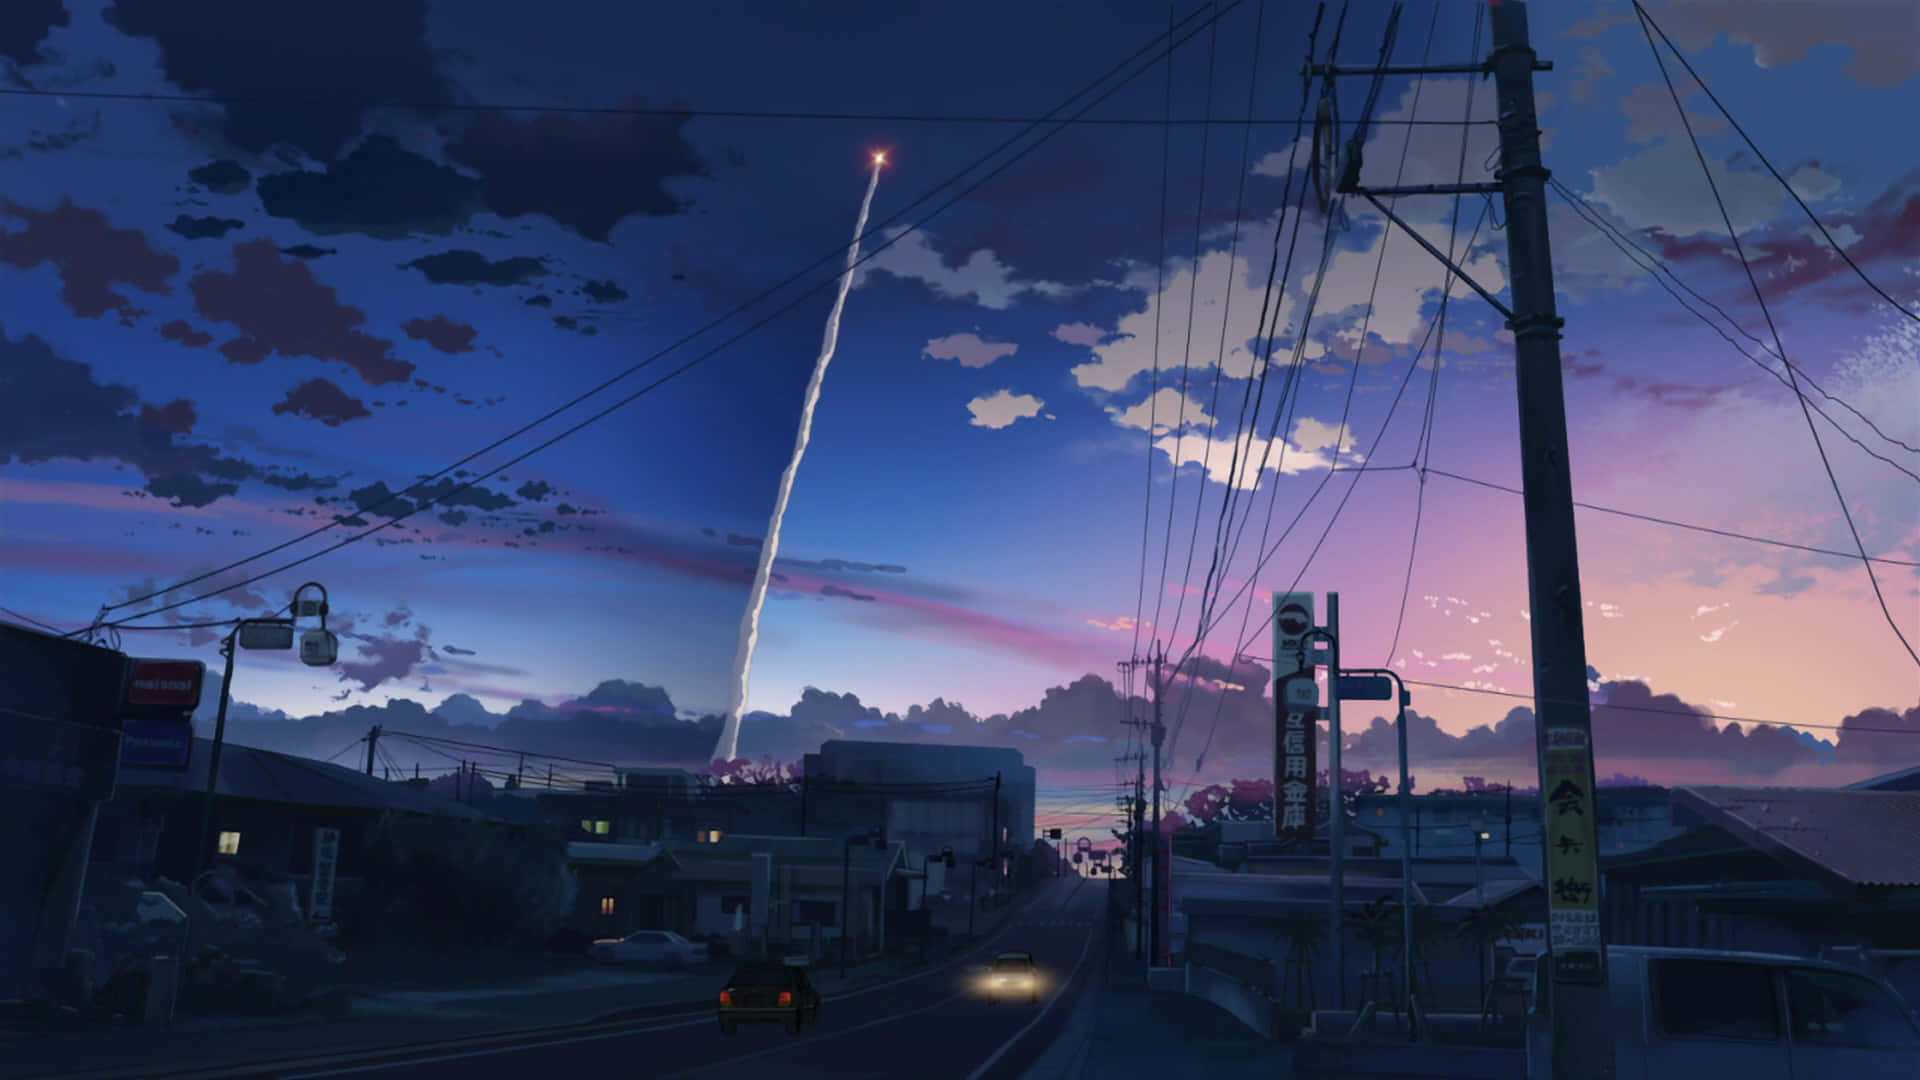 An immersive digital world created by Makoto Shinkai.